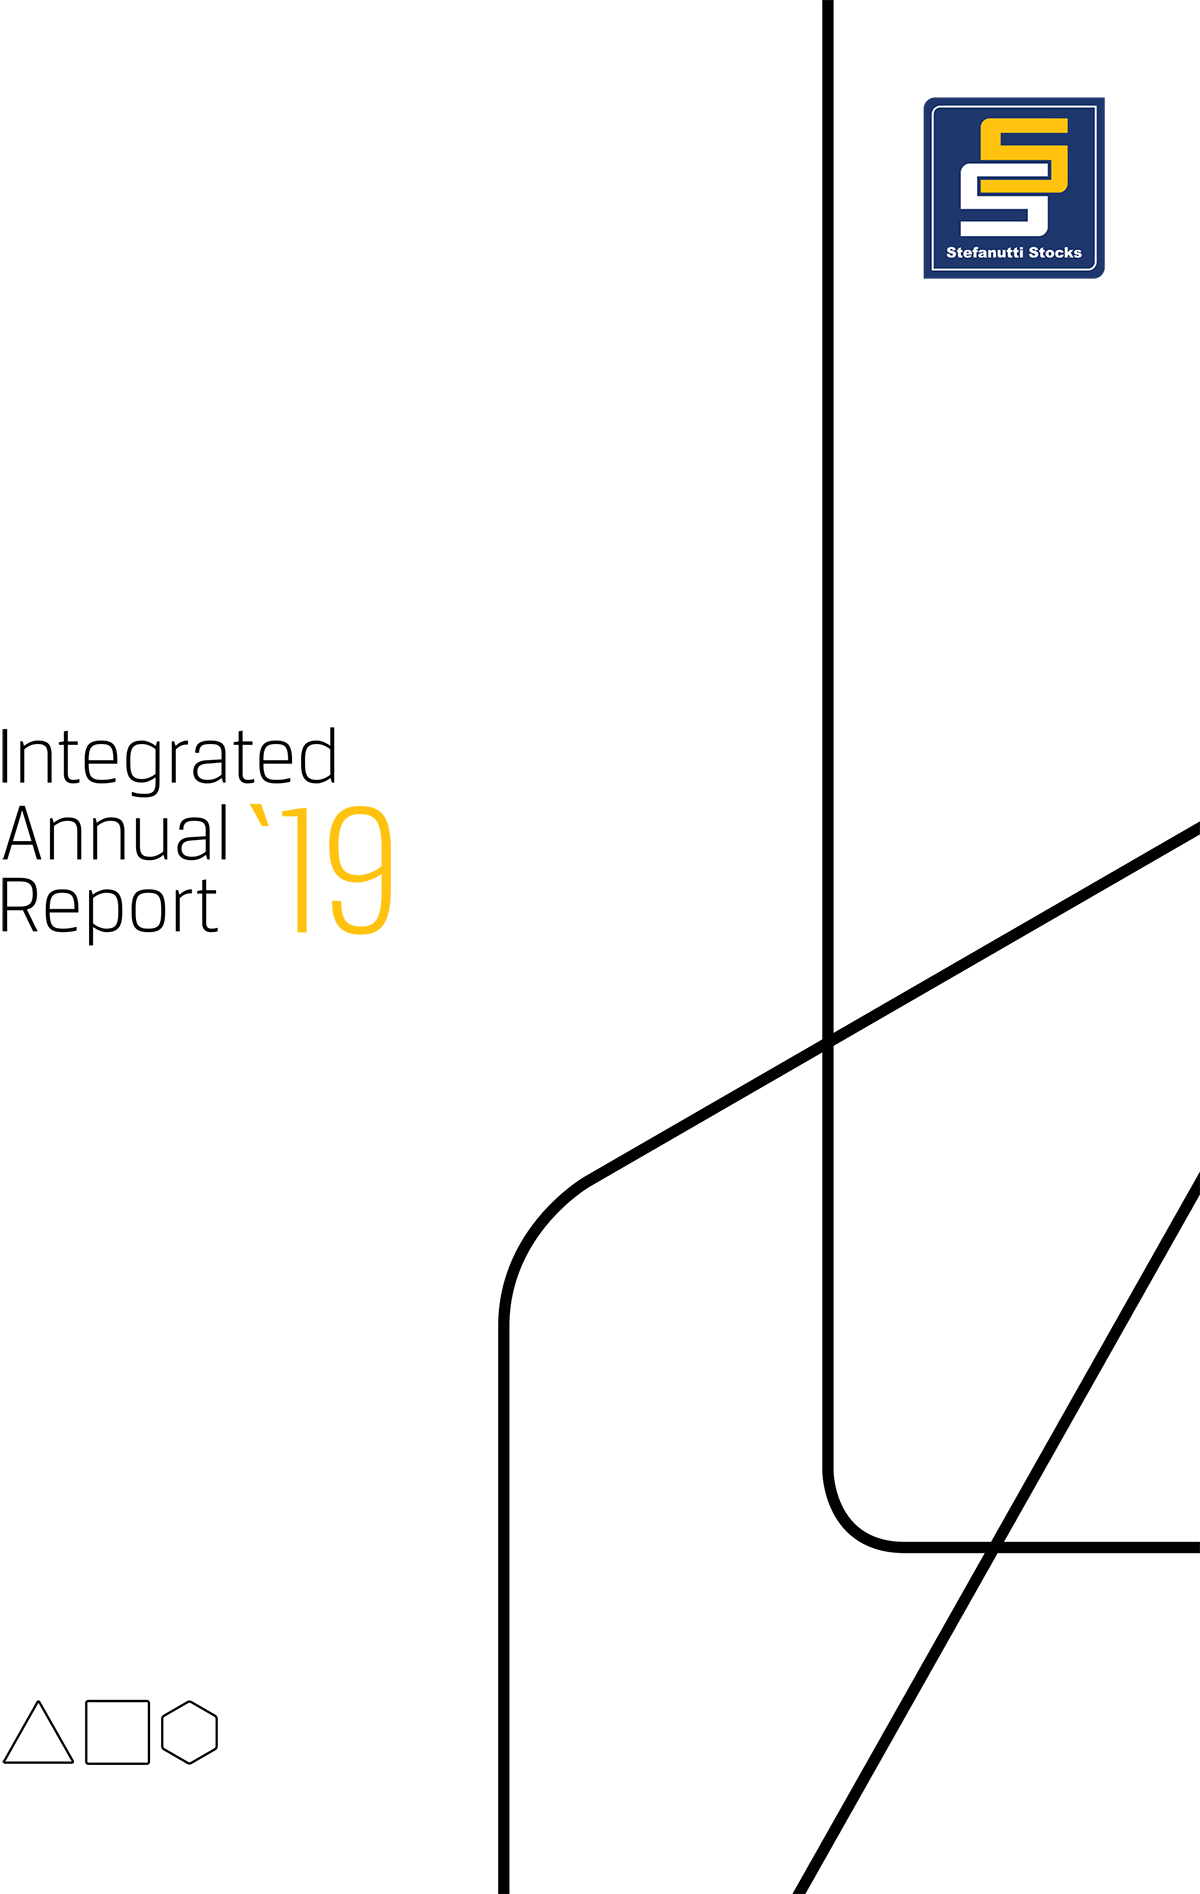 Stefanutti Stocks Integrated Annual Report 2019